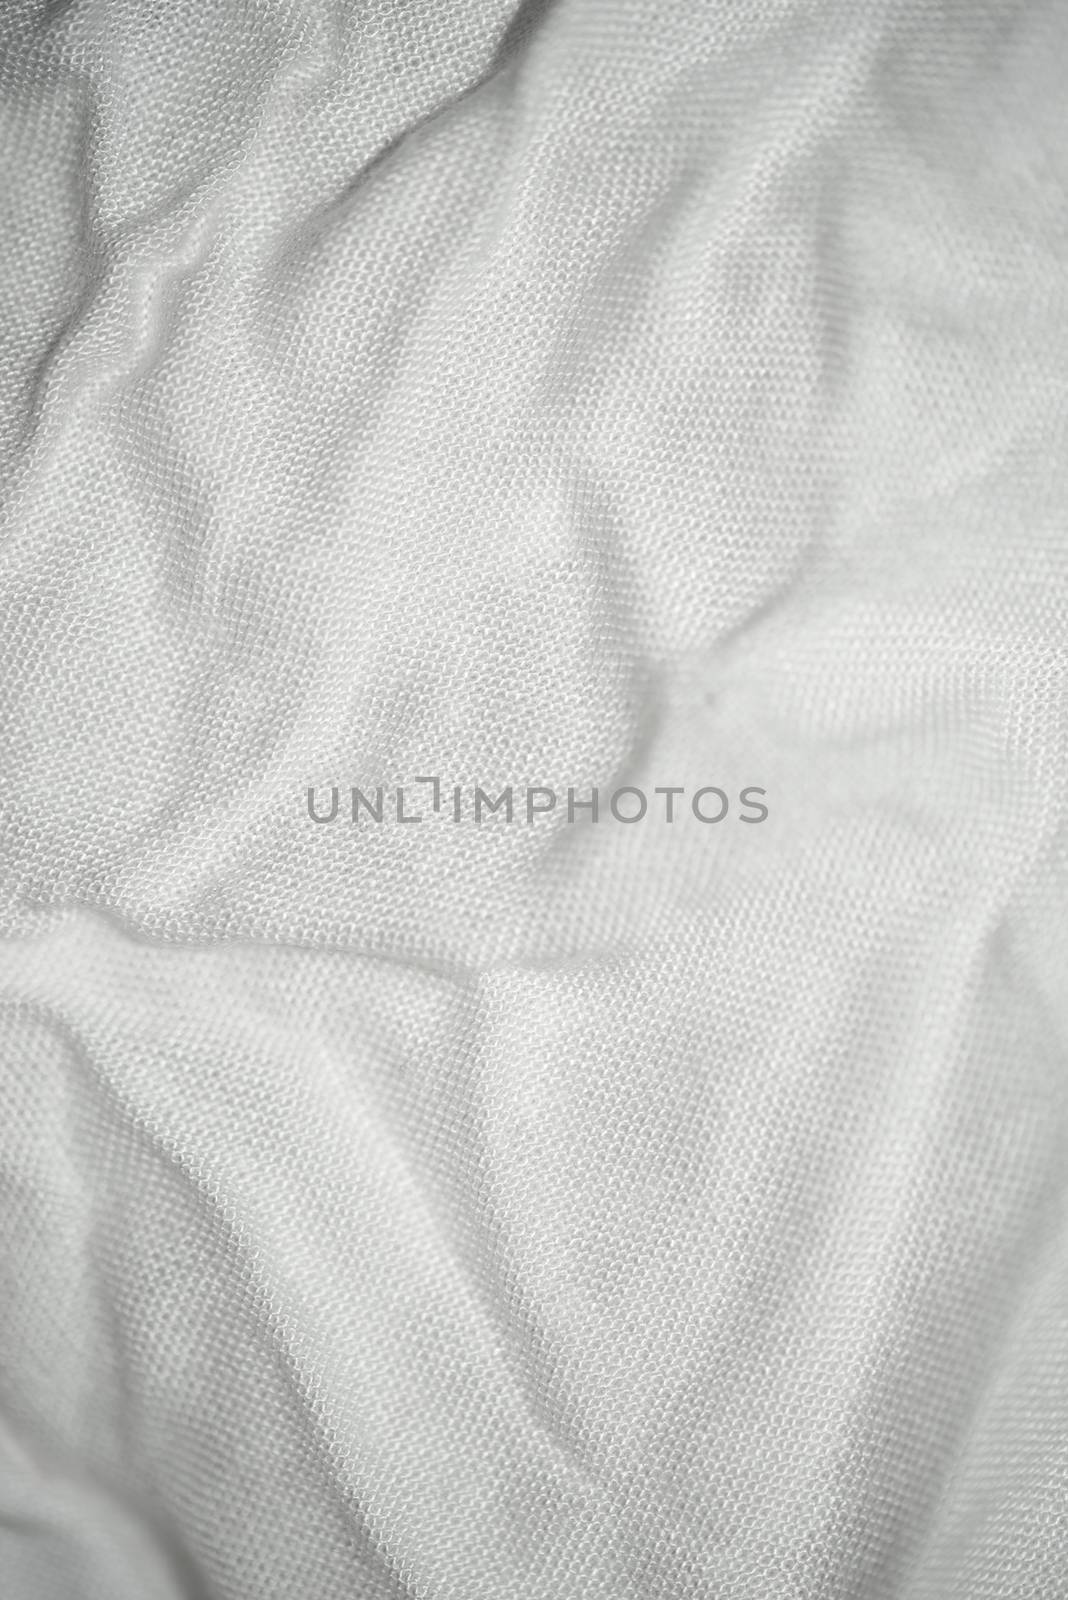 White fabric texture background, Crumpled white fabric texture